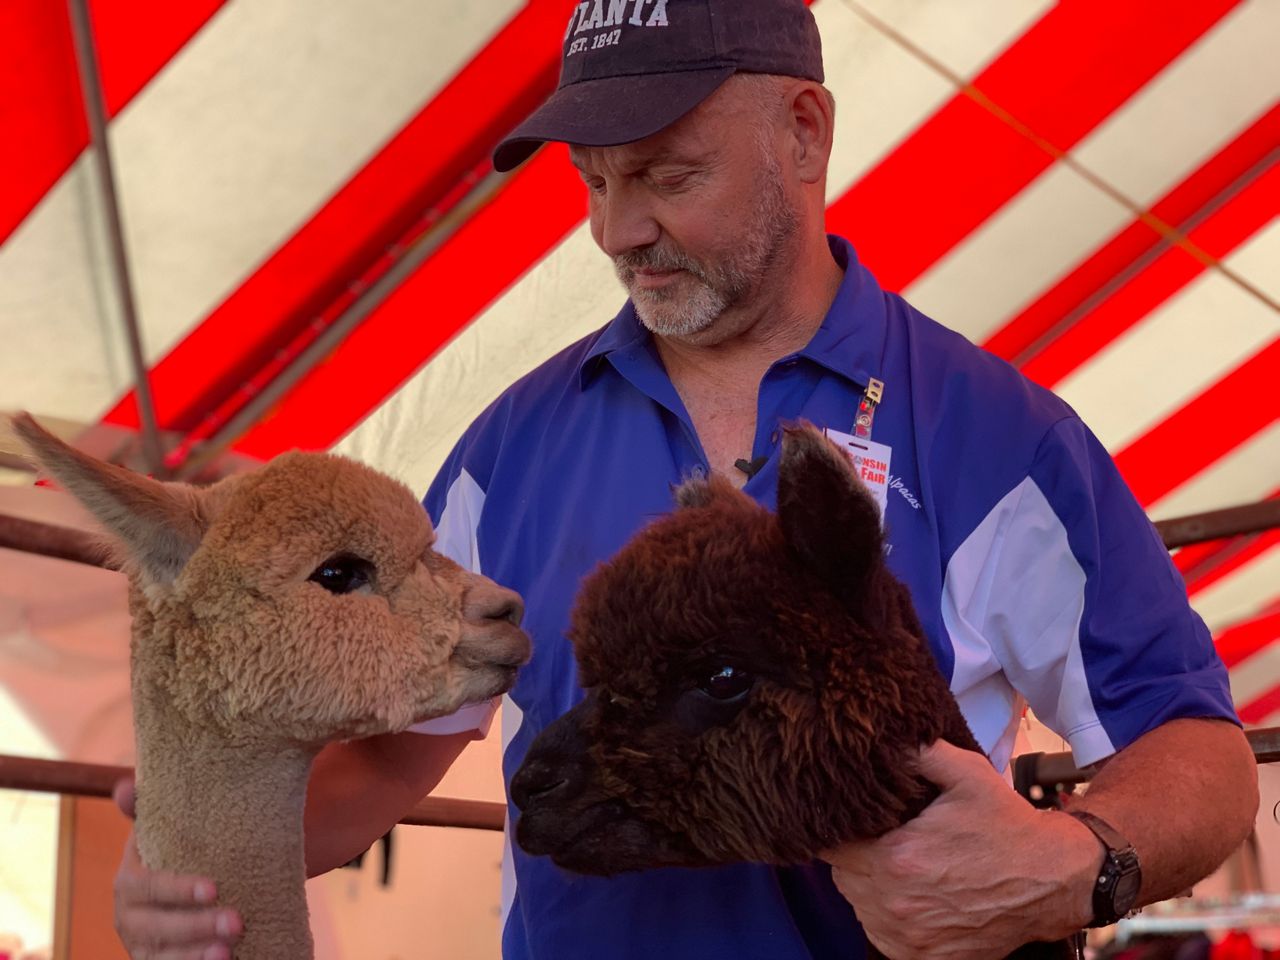 Wisconsin farm shows off alpacas at State Fair